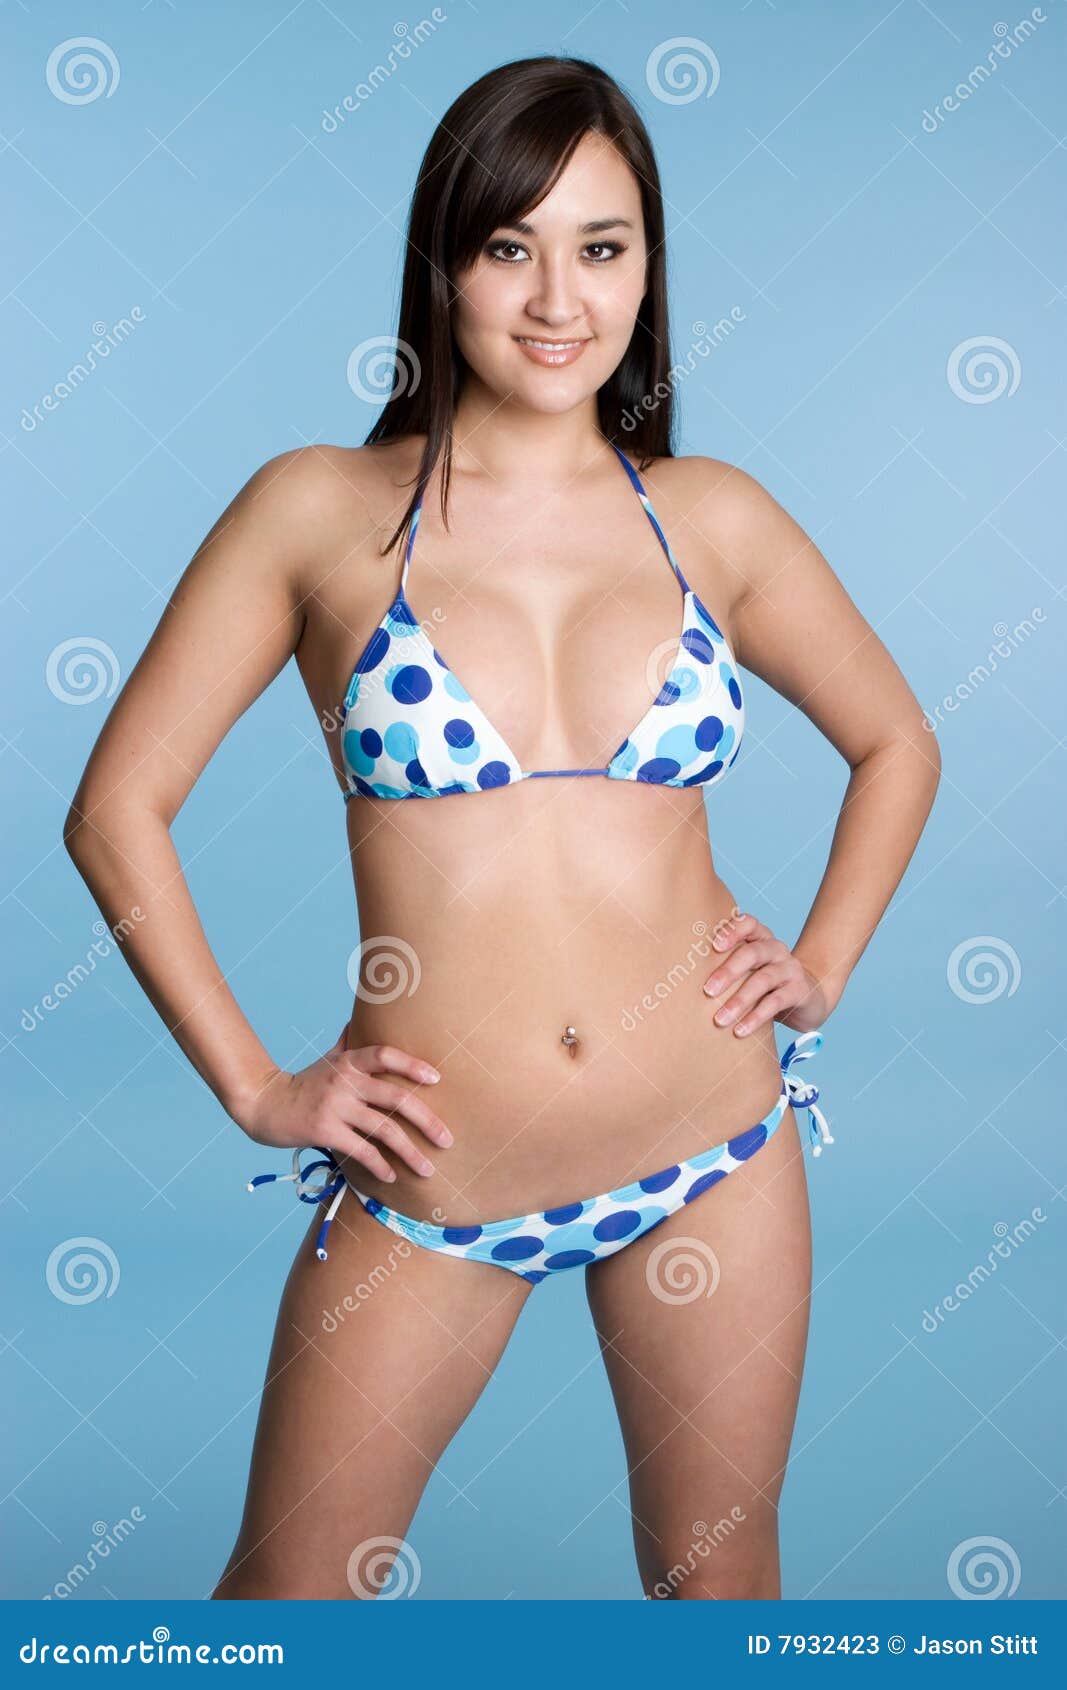 Bikini Girls Stock - Free & Royalty-Free Stock Photos from Dreamstime